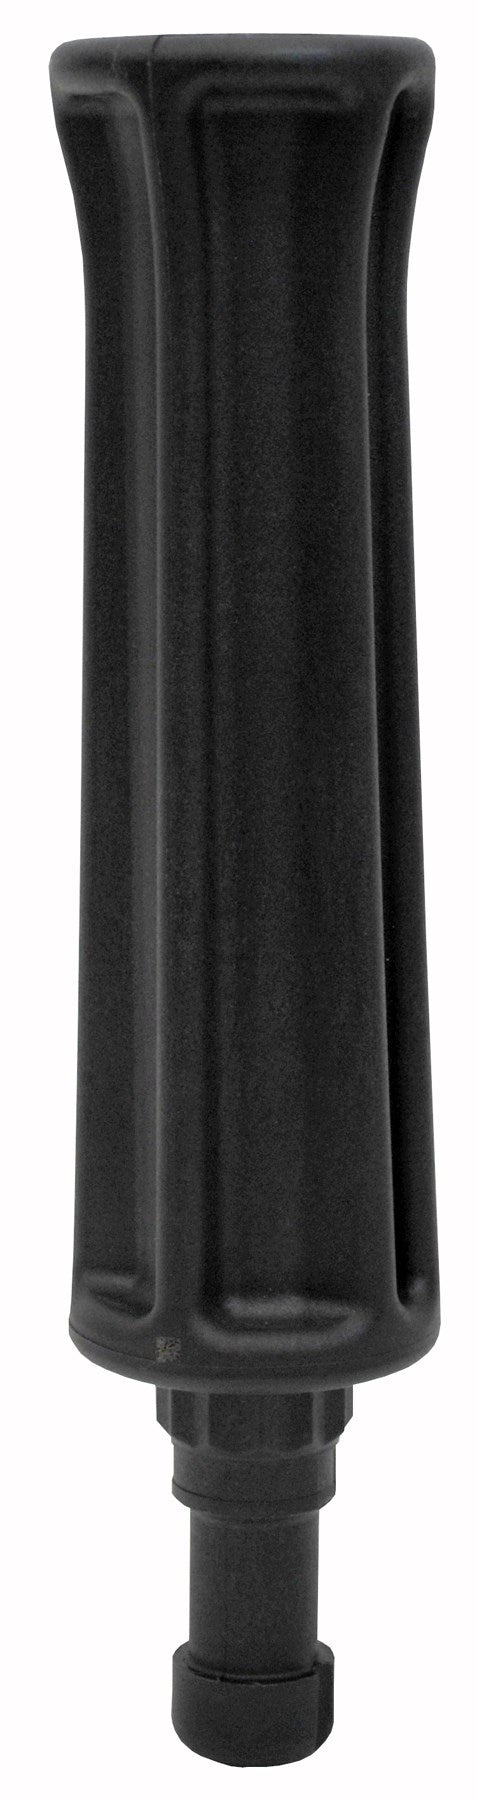 Attwood 5016-3 6" Black Rod Holder Extension